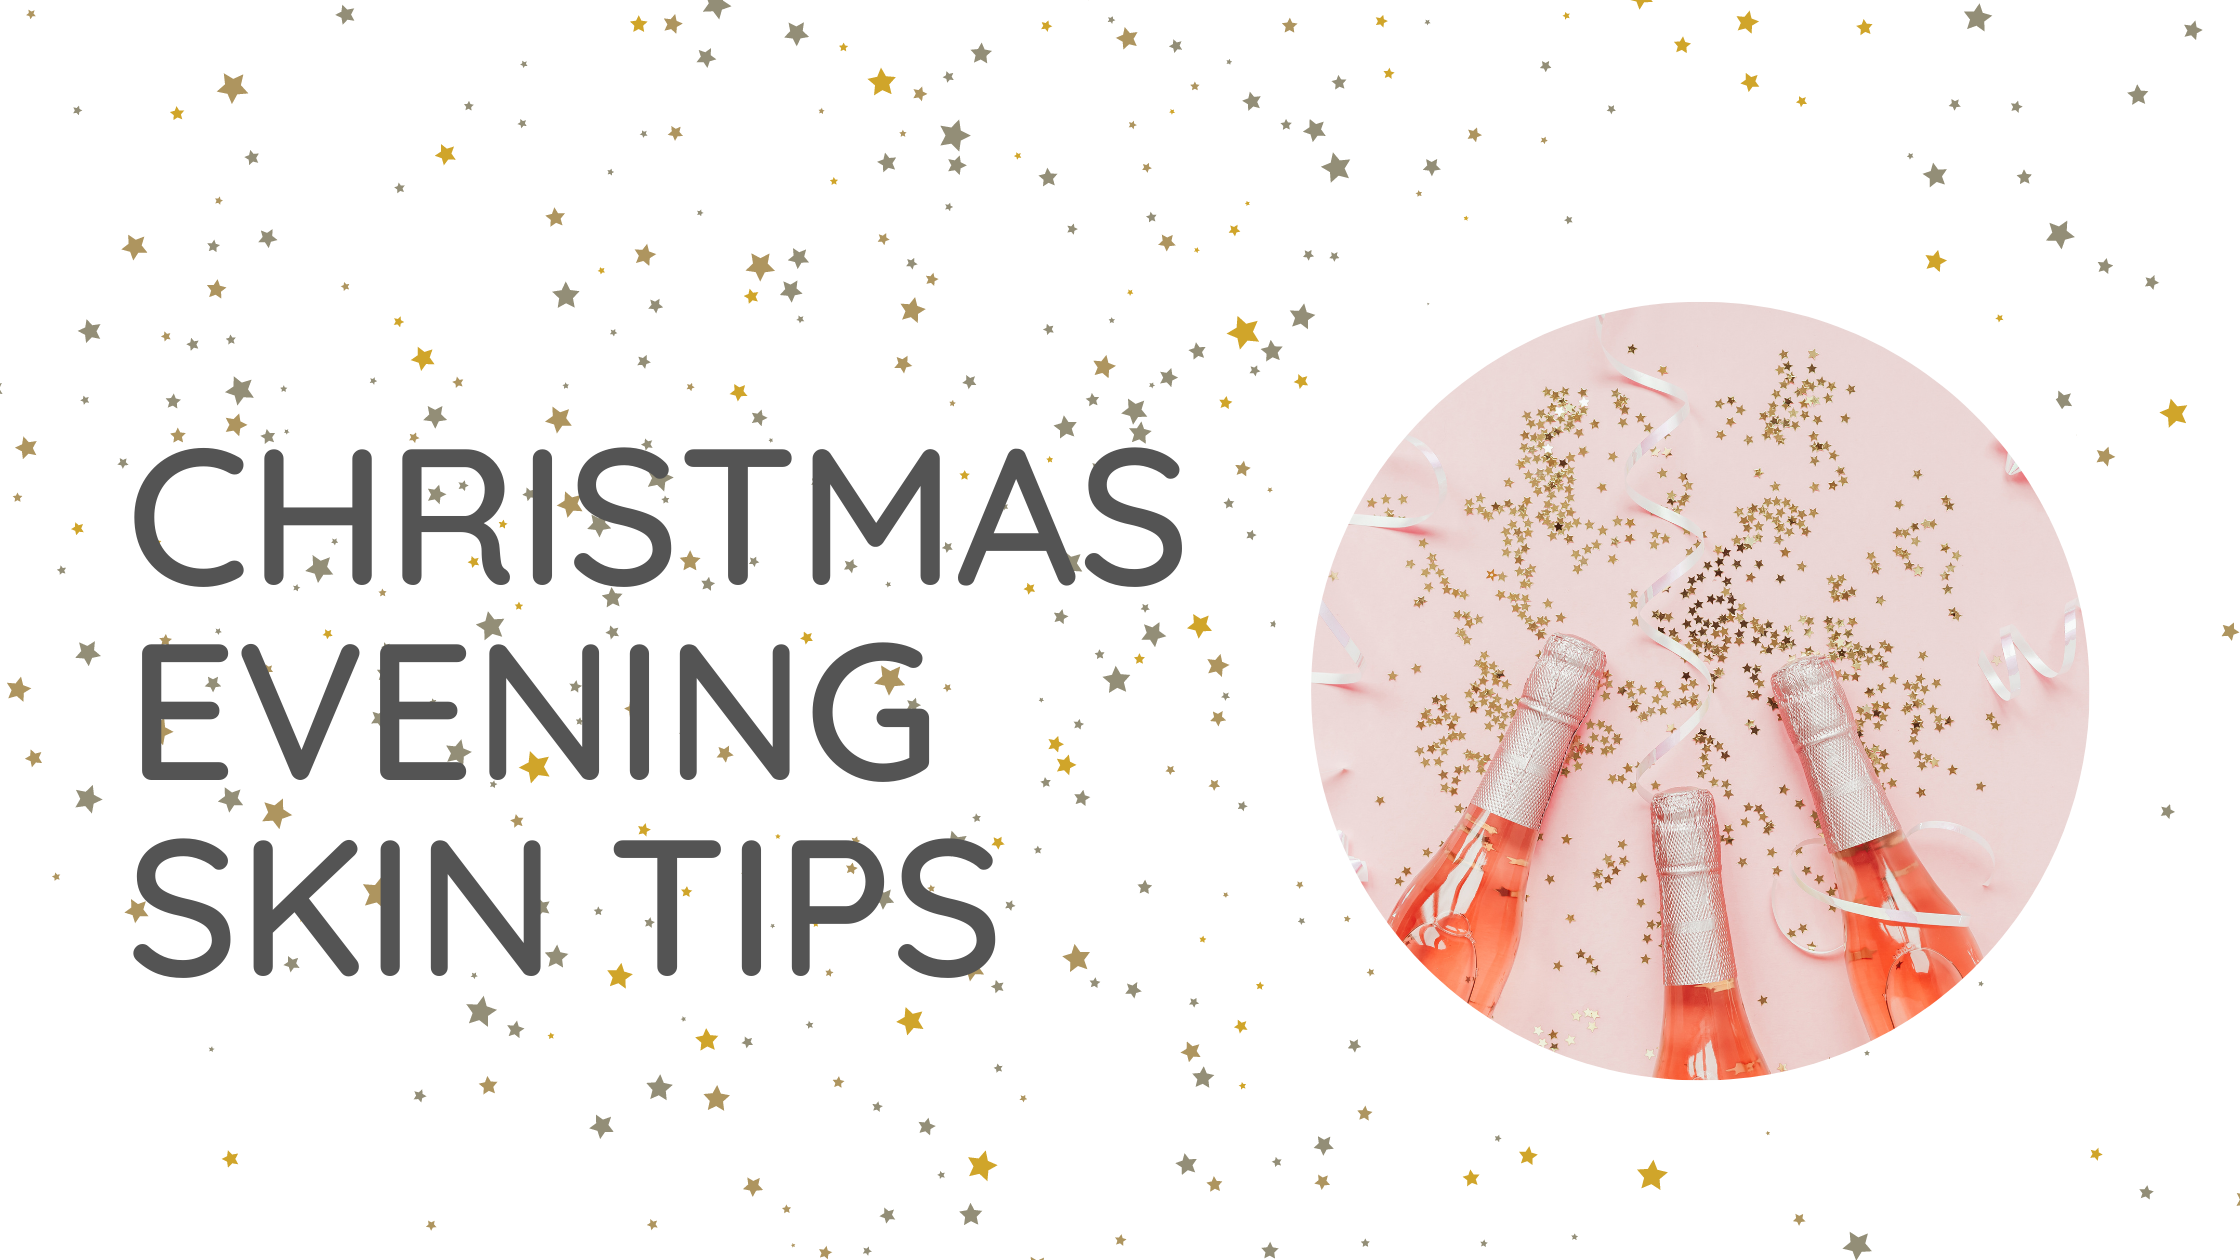 Festive season skincare tips 